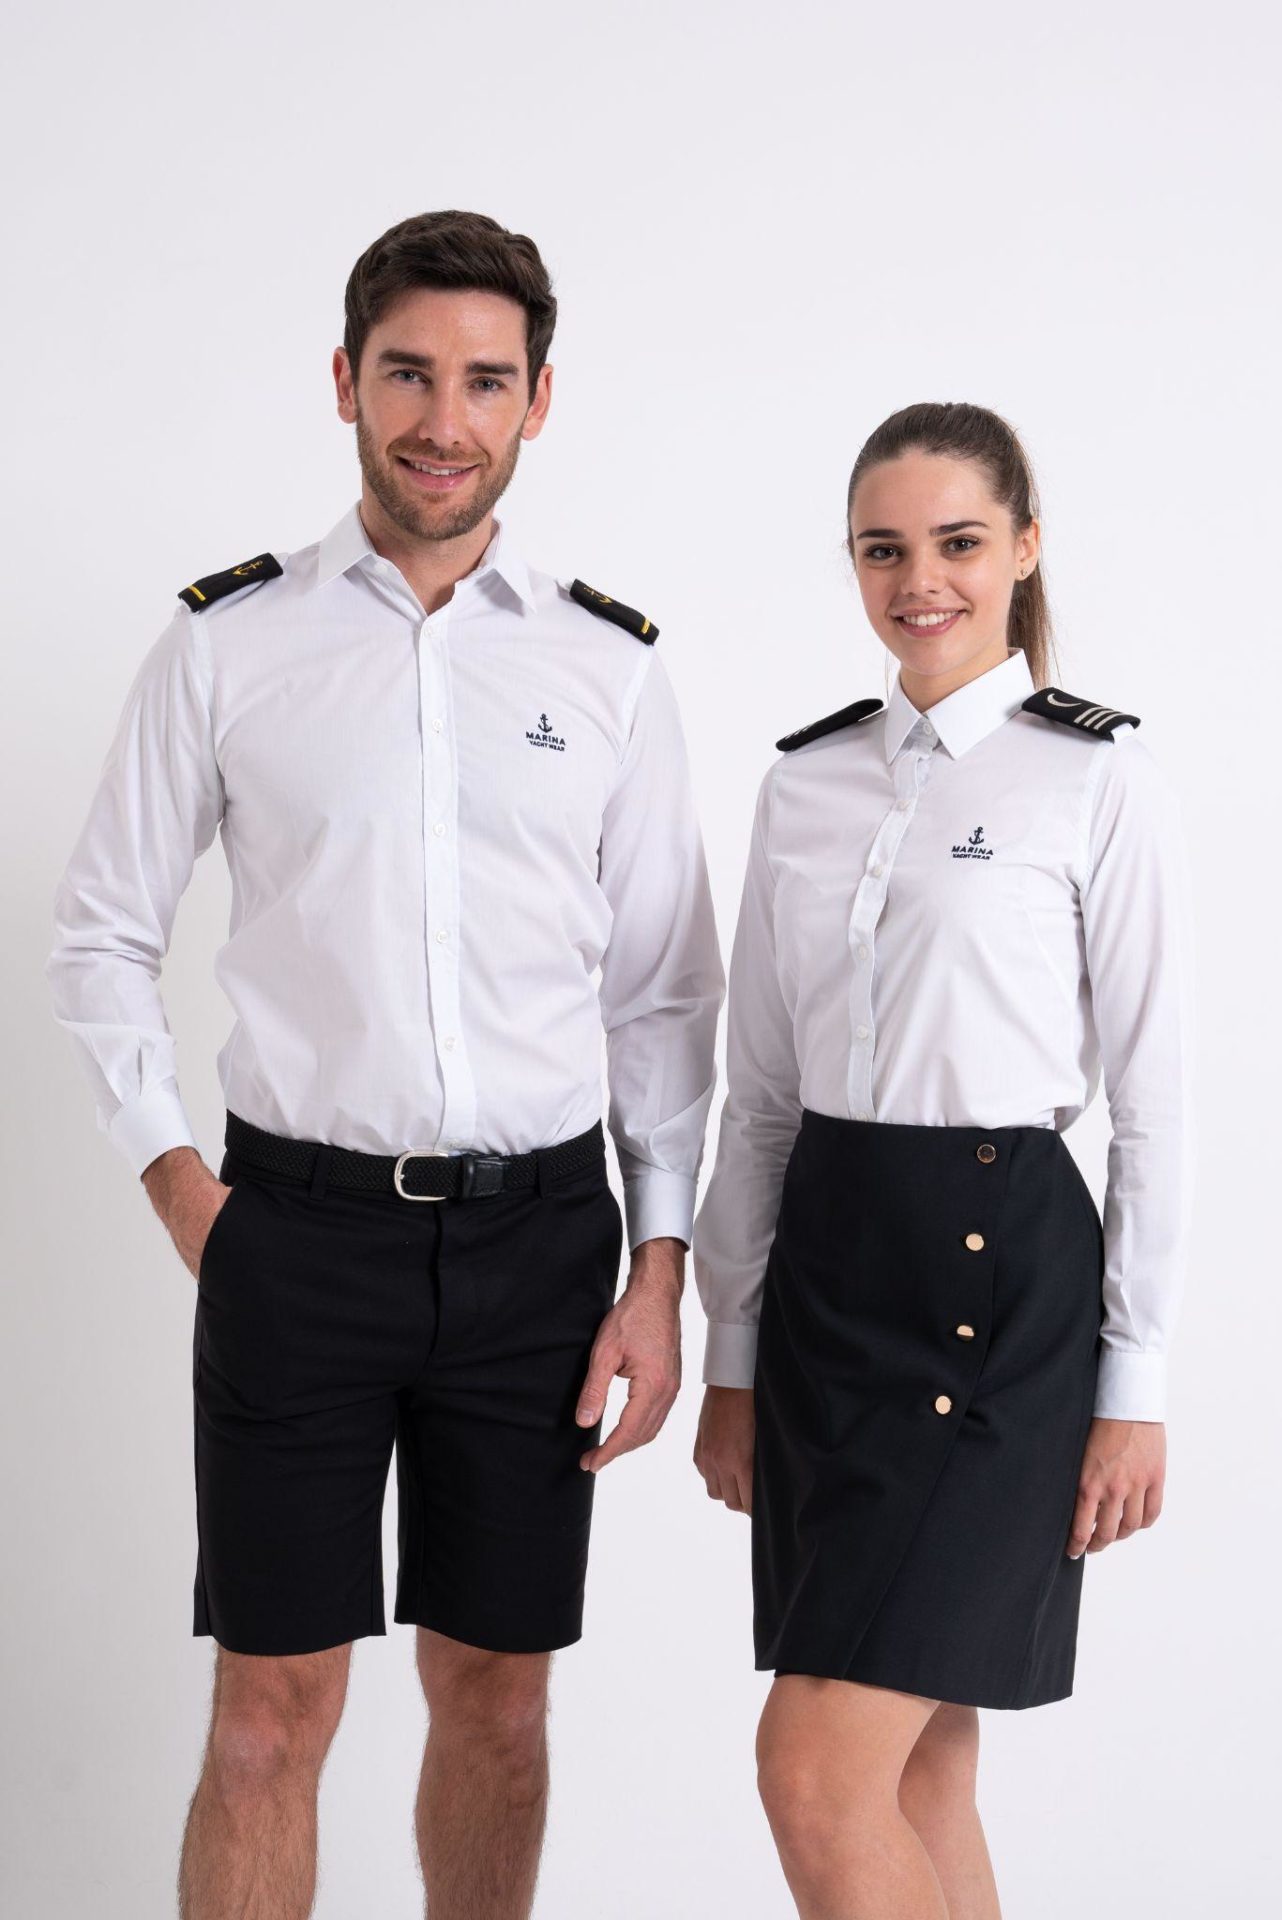 Yacht crew uniforms